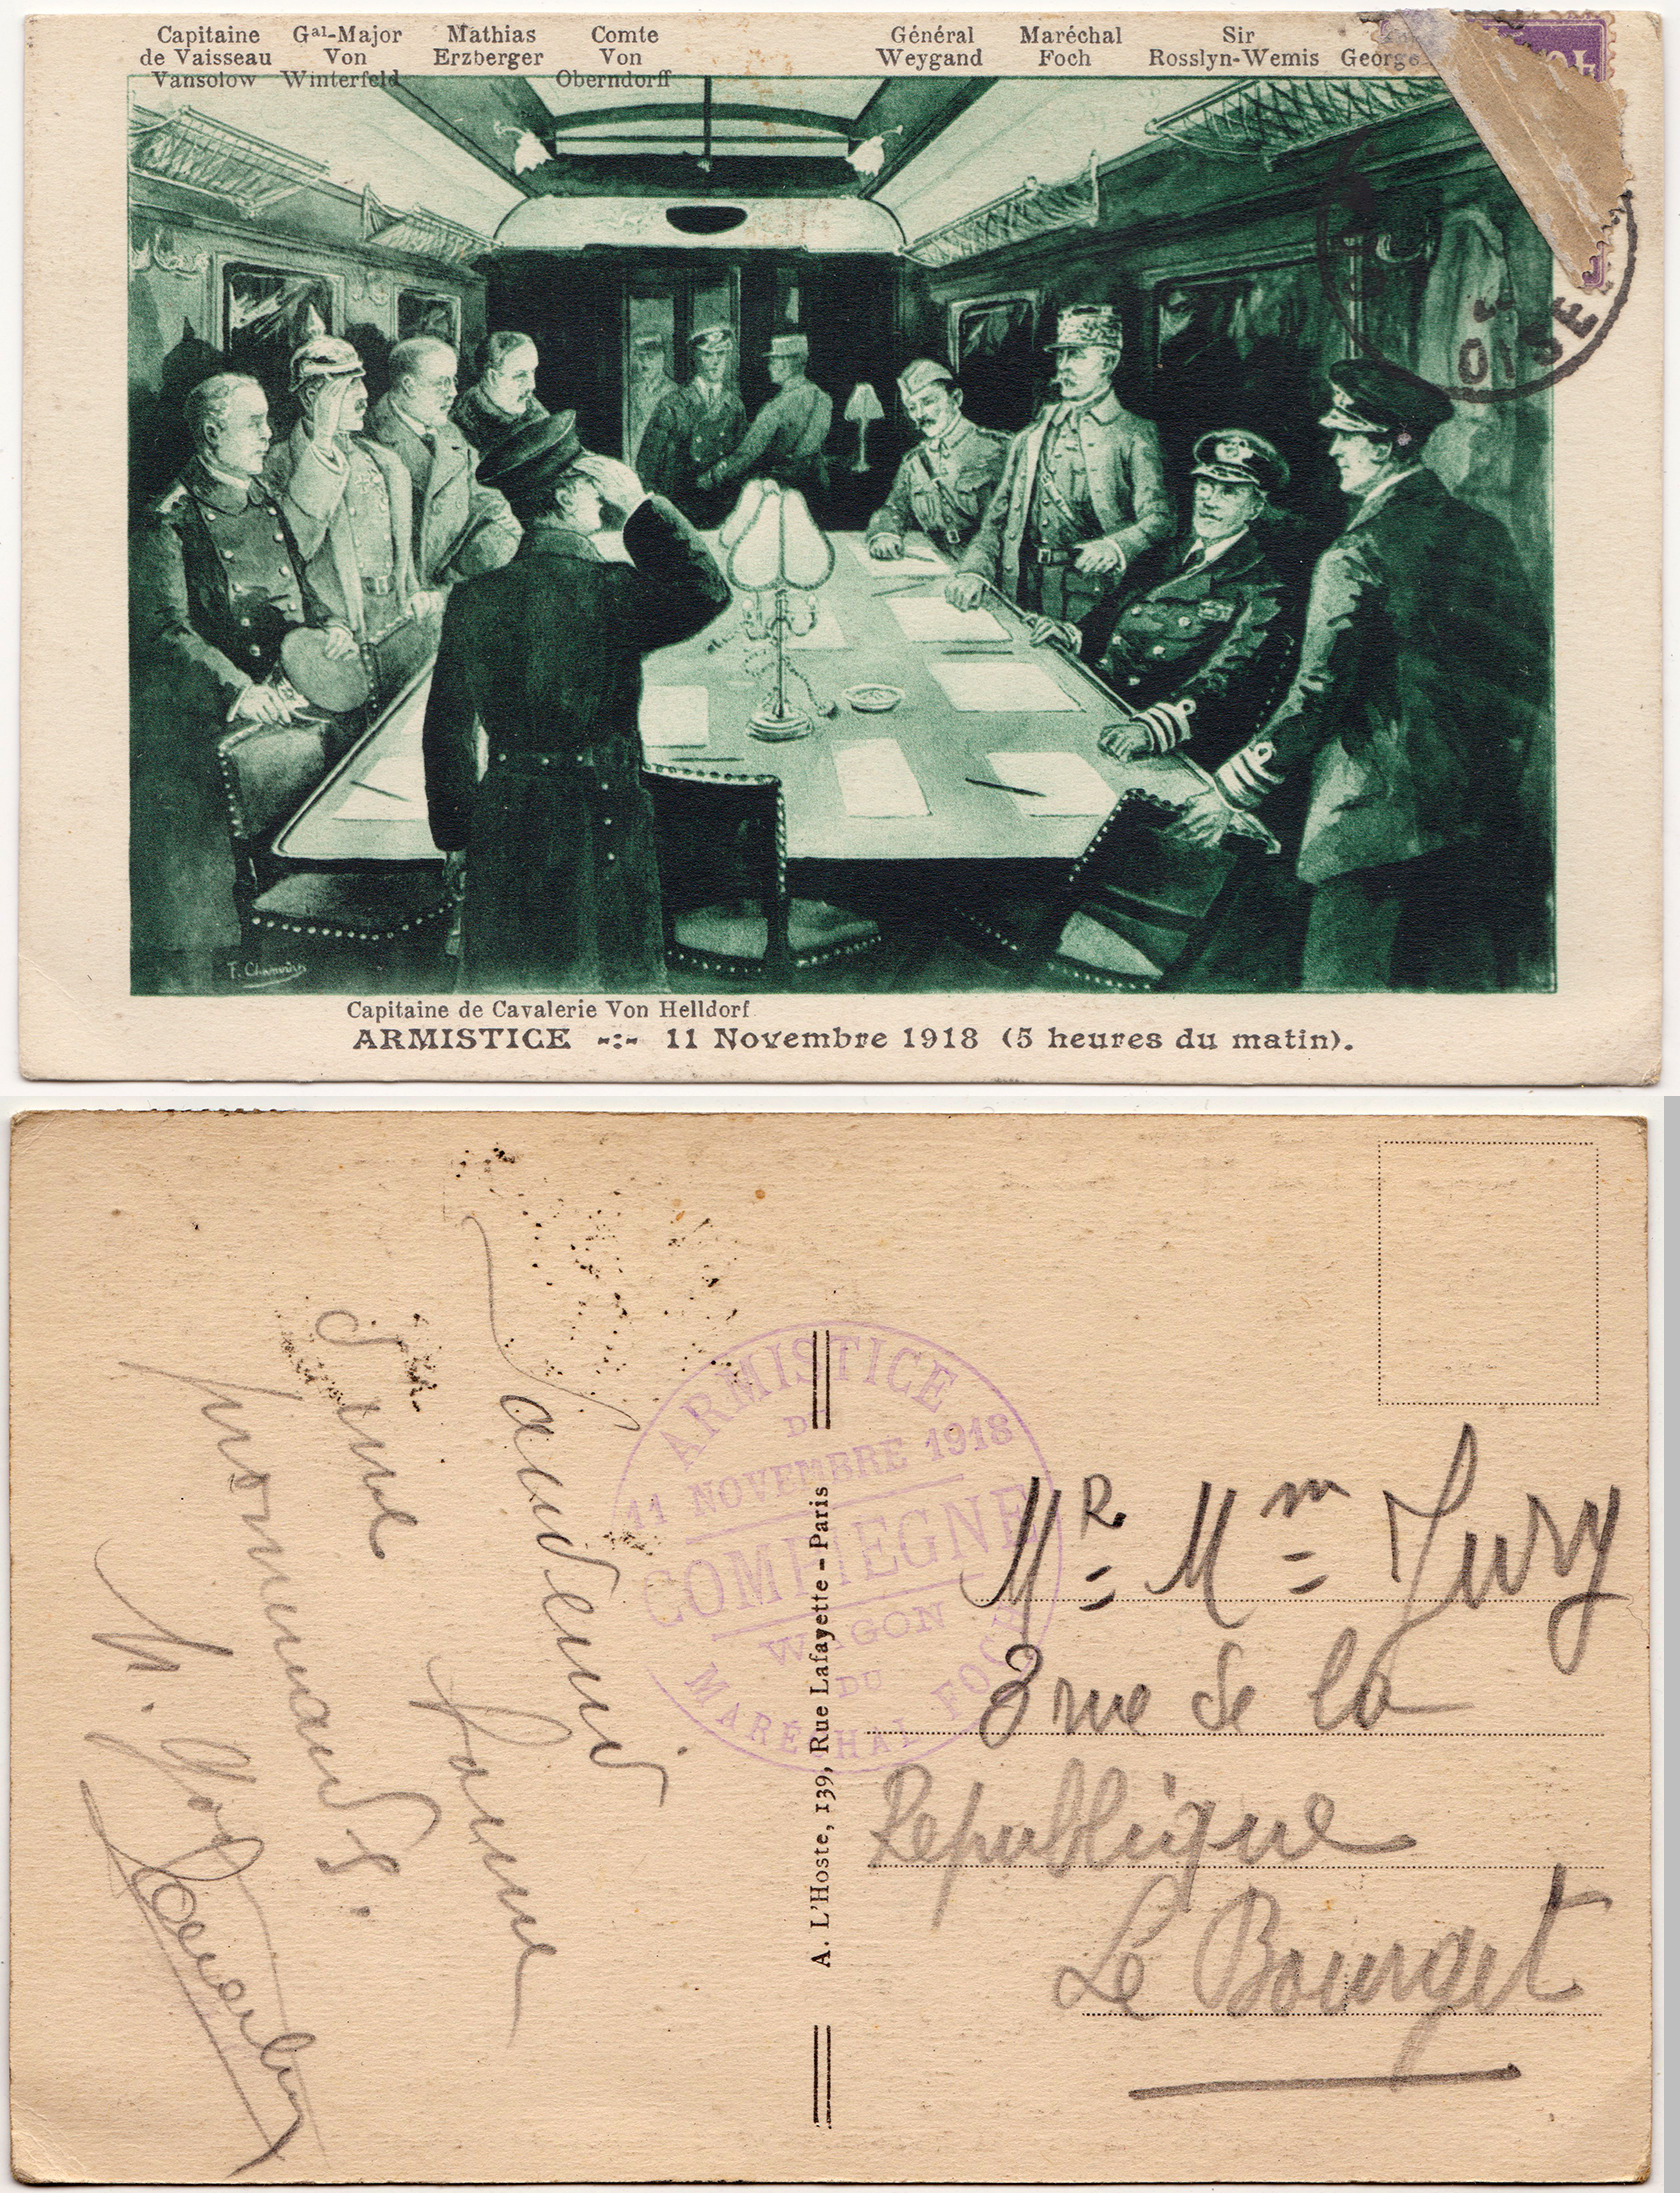 Cartes postales patriotiques françaises de la Grande Guerre - recensement - Page 3 Aa807696d6210af728794296b8487e1c901af47c